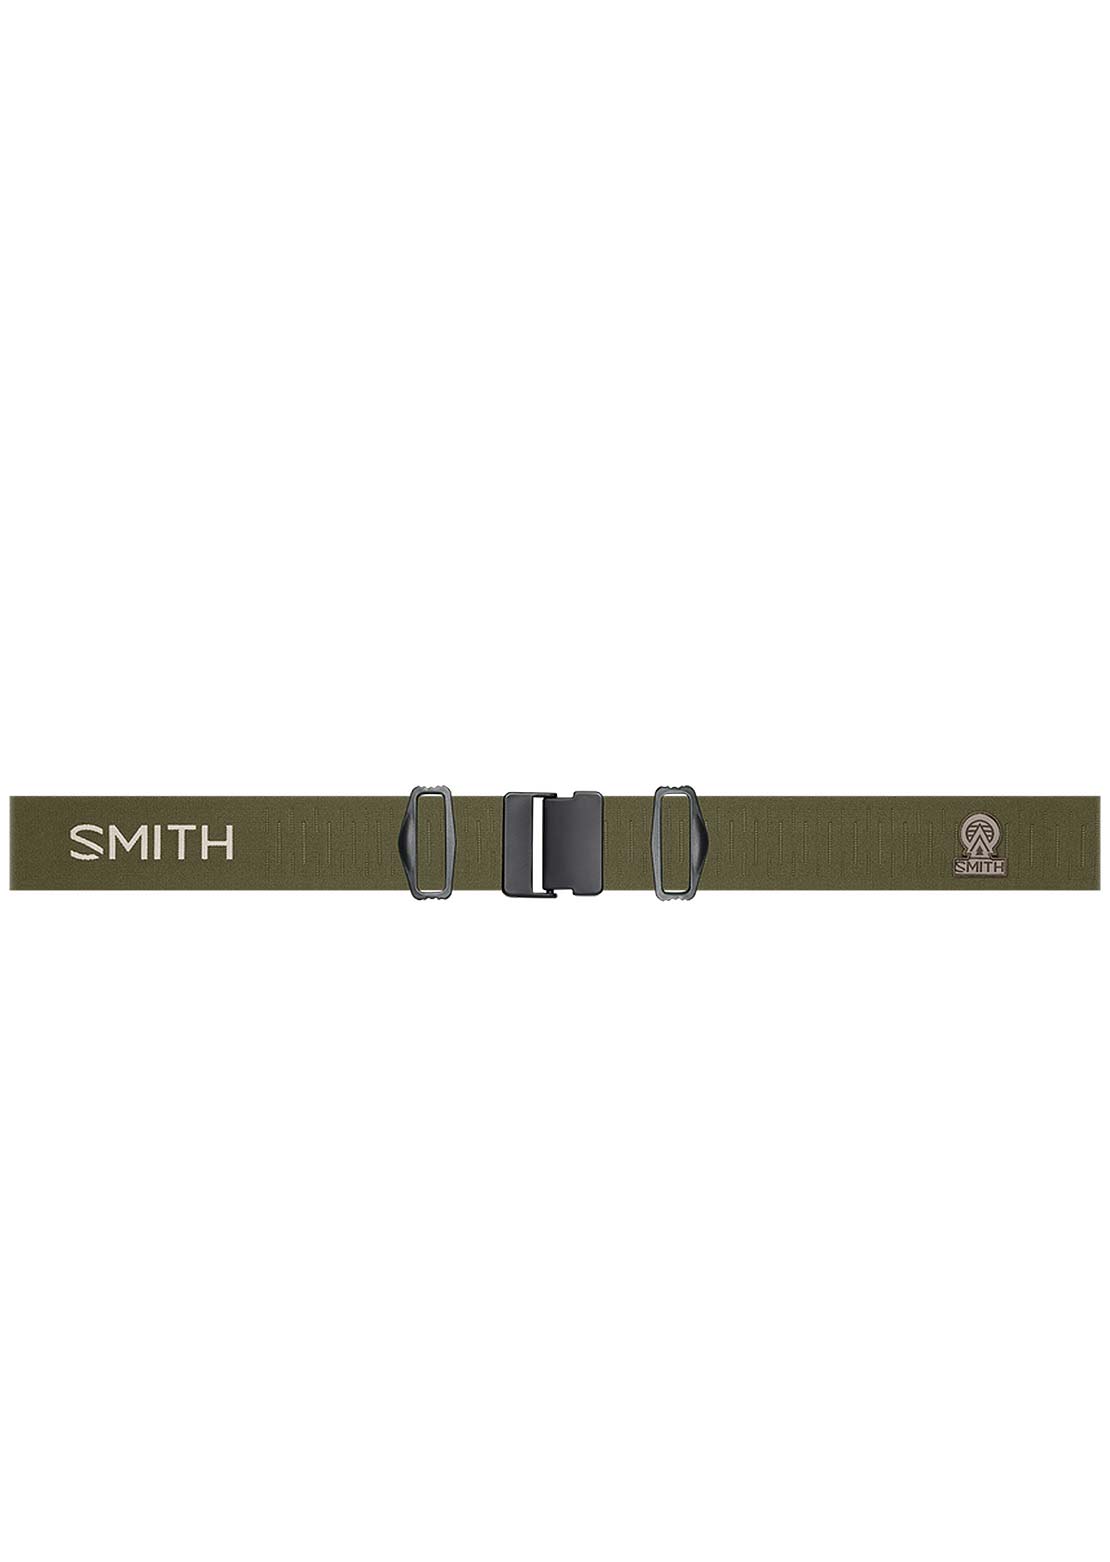 Smith I/O Mag XL Goggles Forest/Chromapop Sun Platinum Mirror